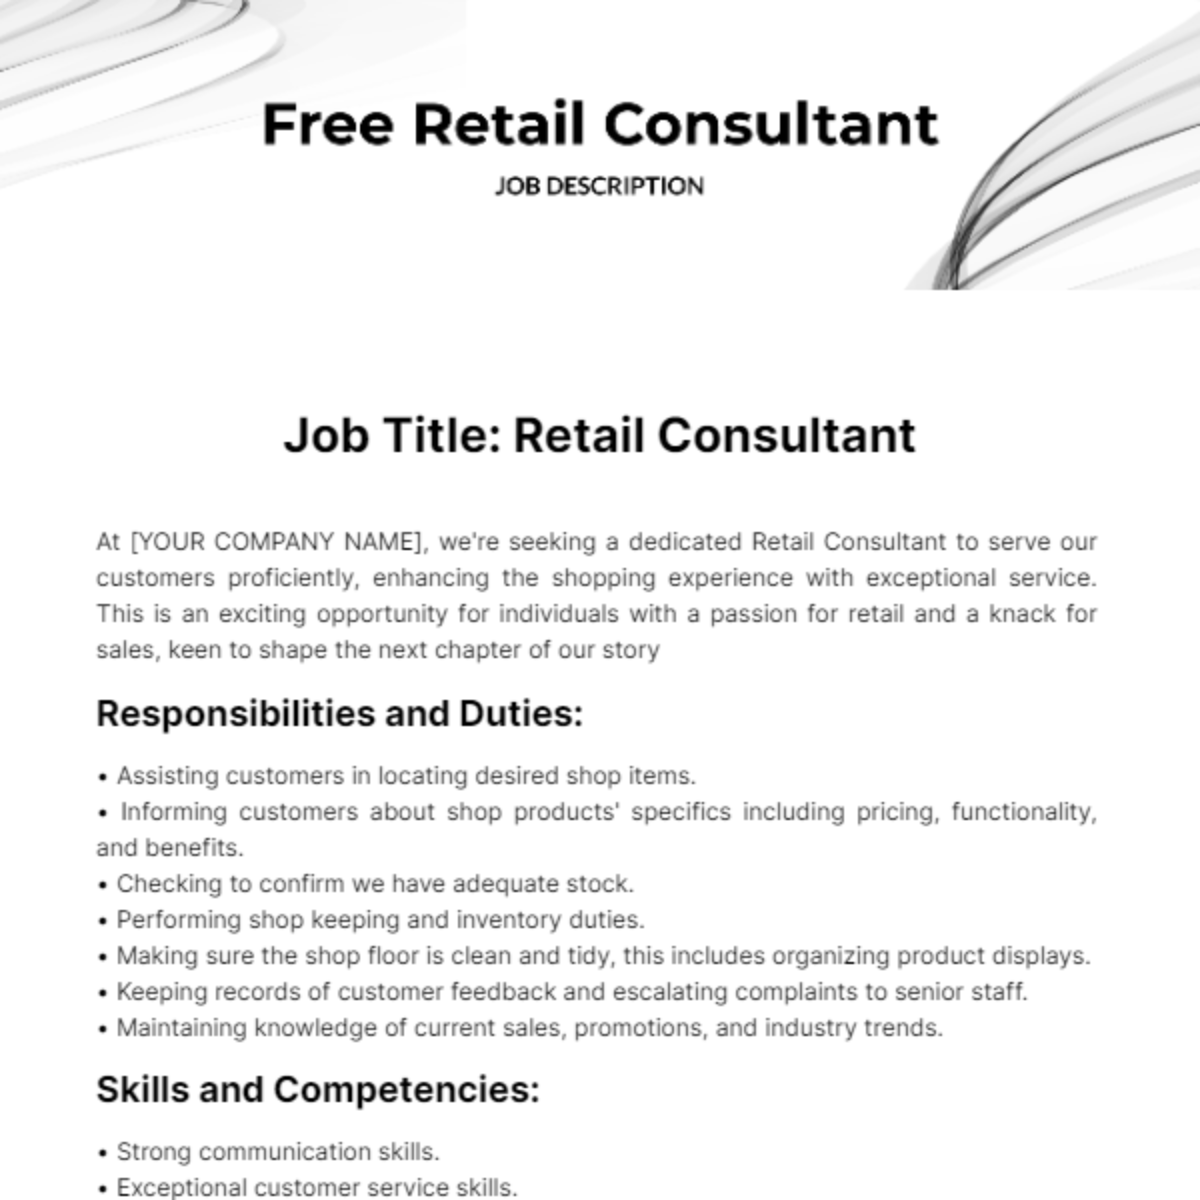 Free Retail Consultant Job Description Template